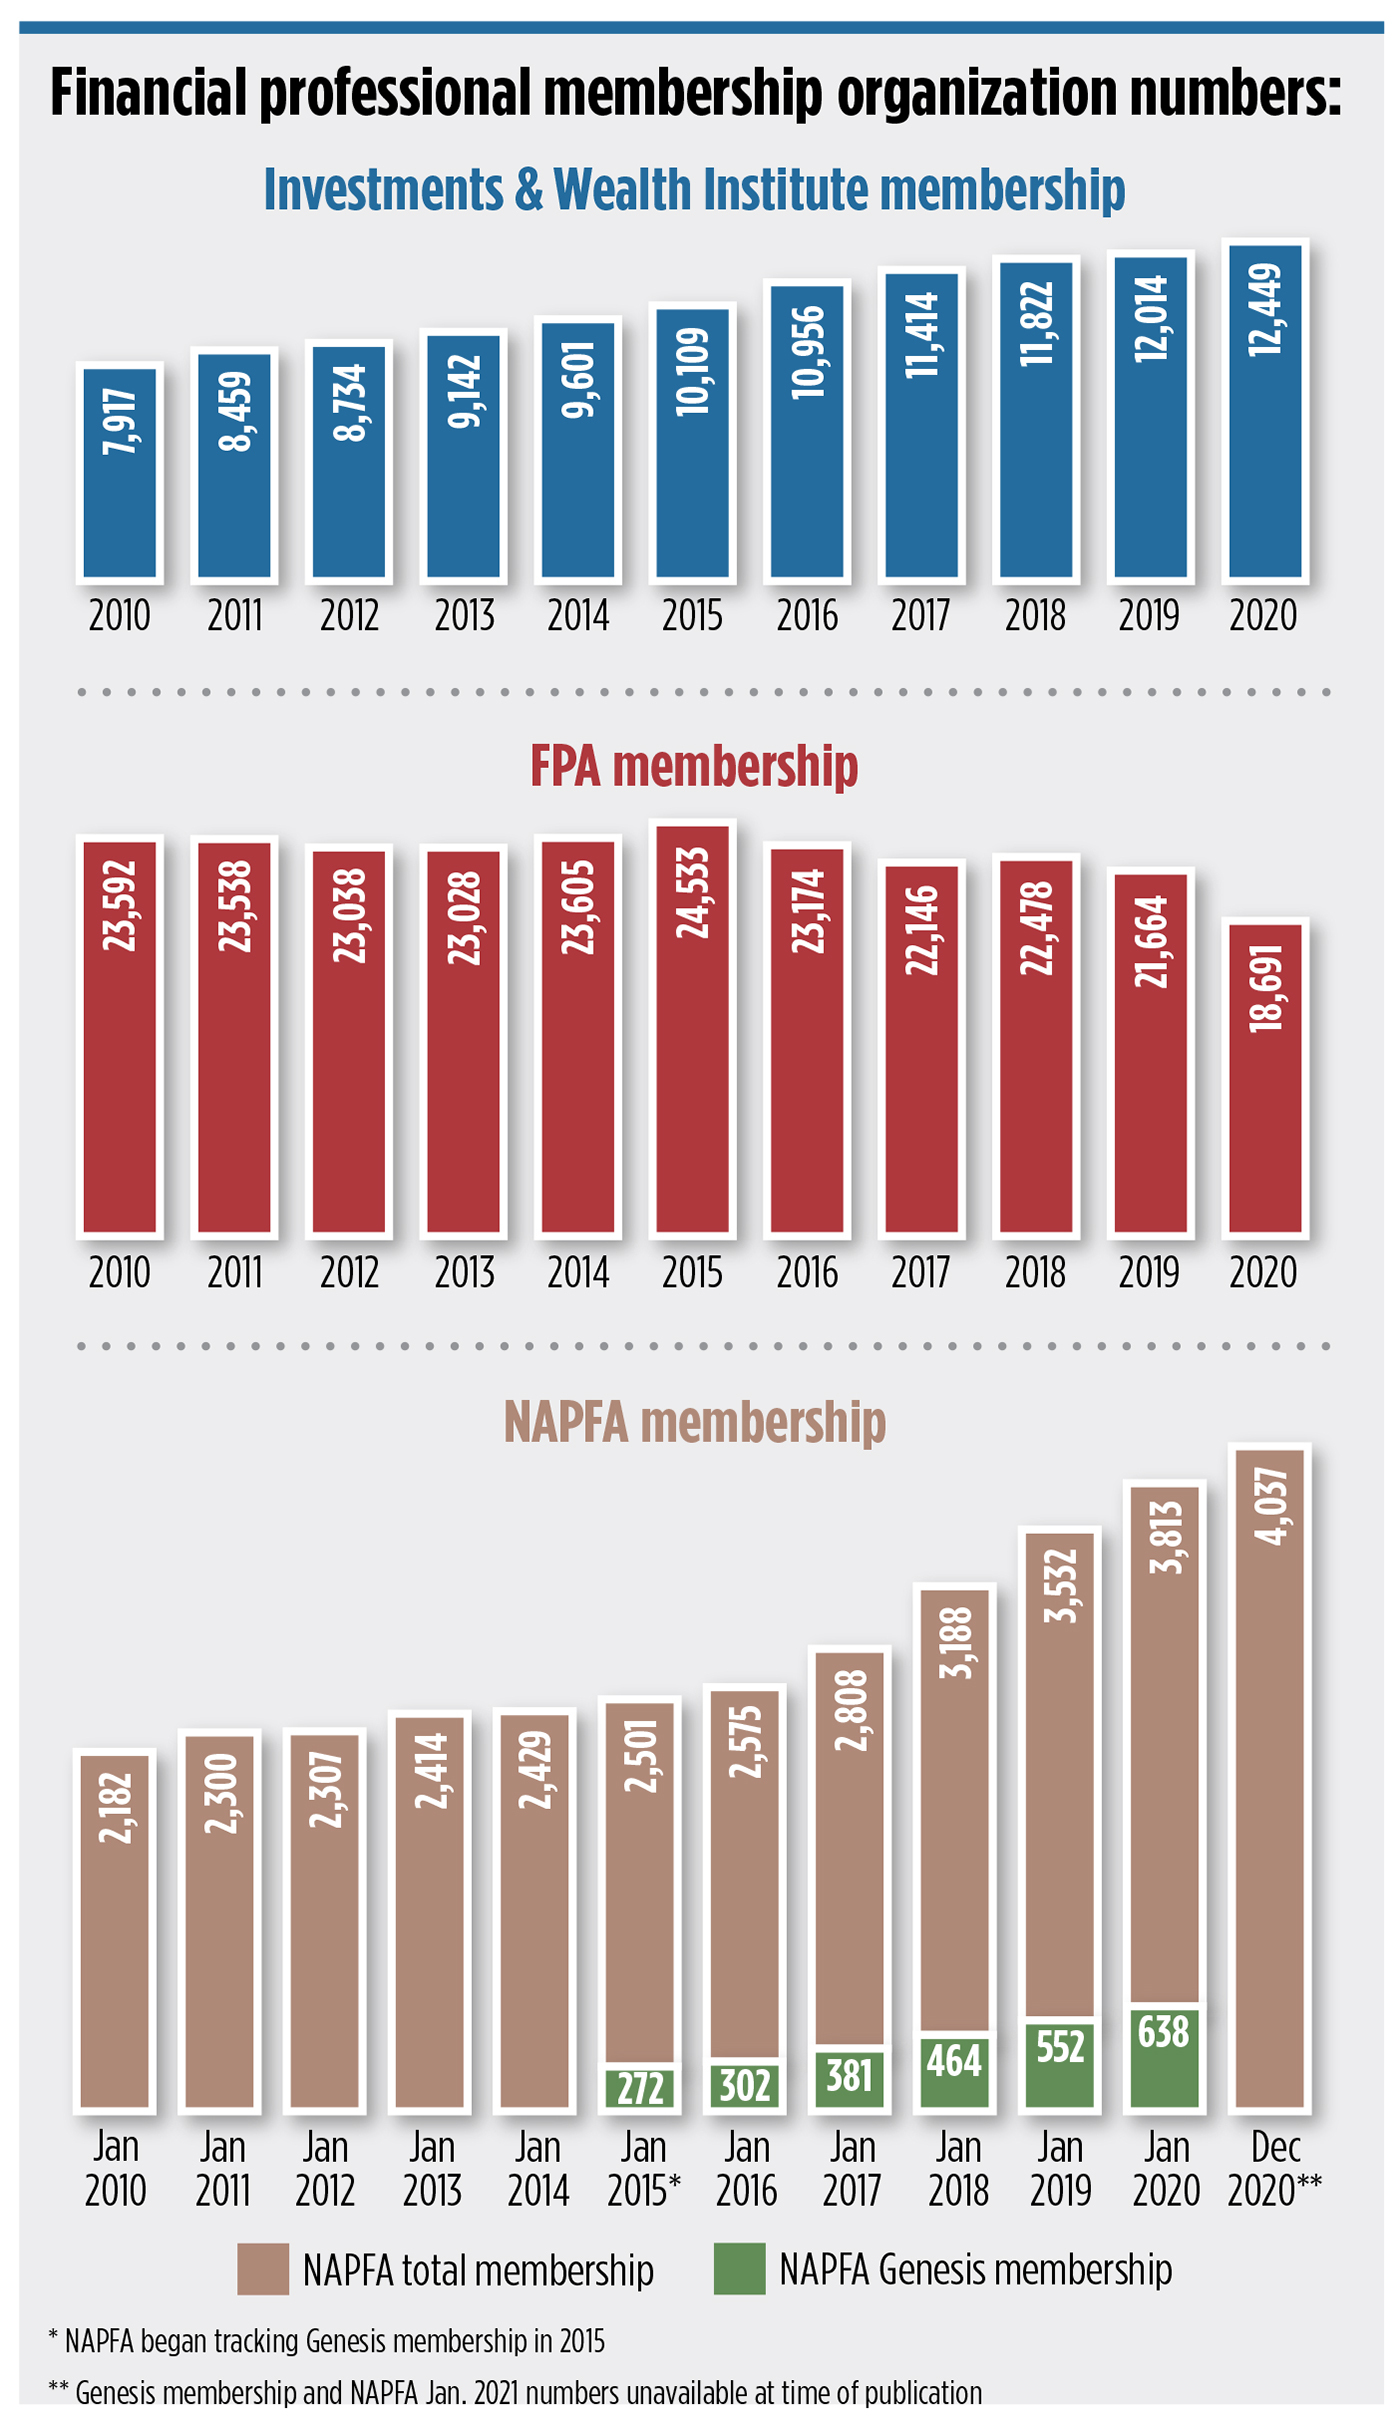 IWI FPA NAPFA membership trends